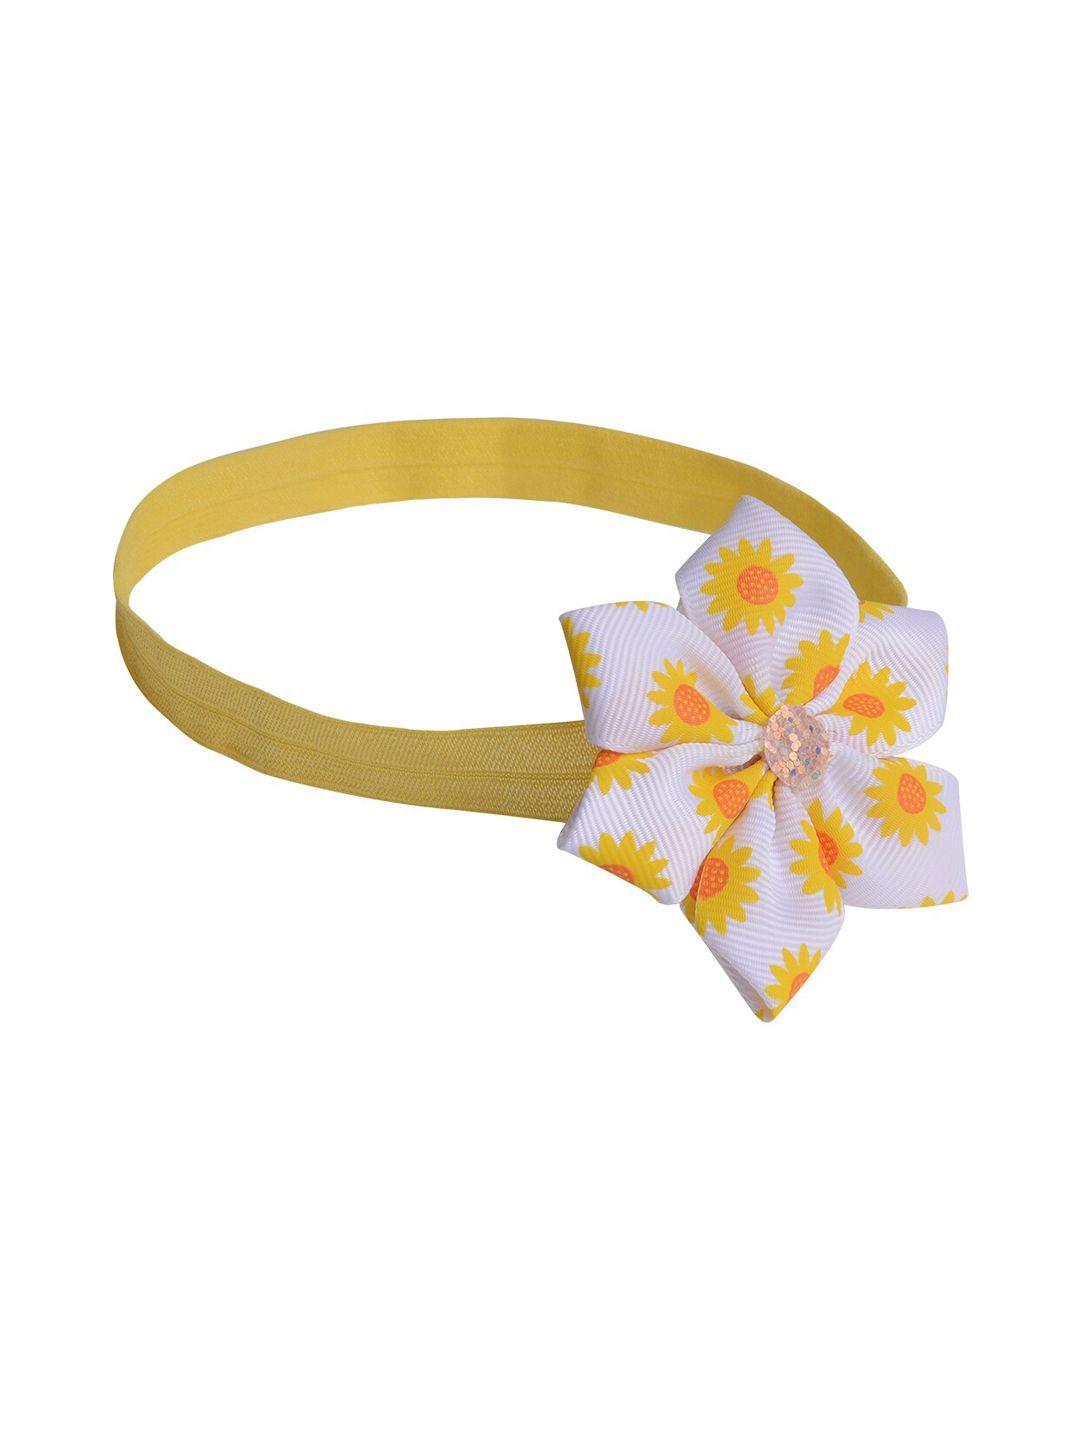 aye-candy-girls-yellow-&-white-printed-floral-headband